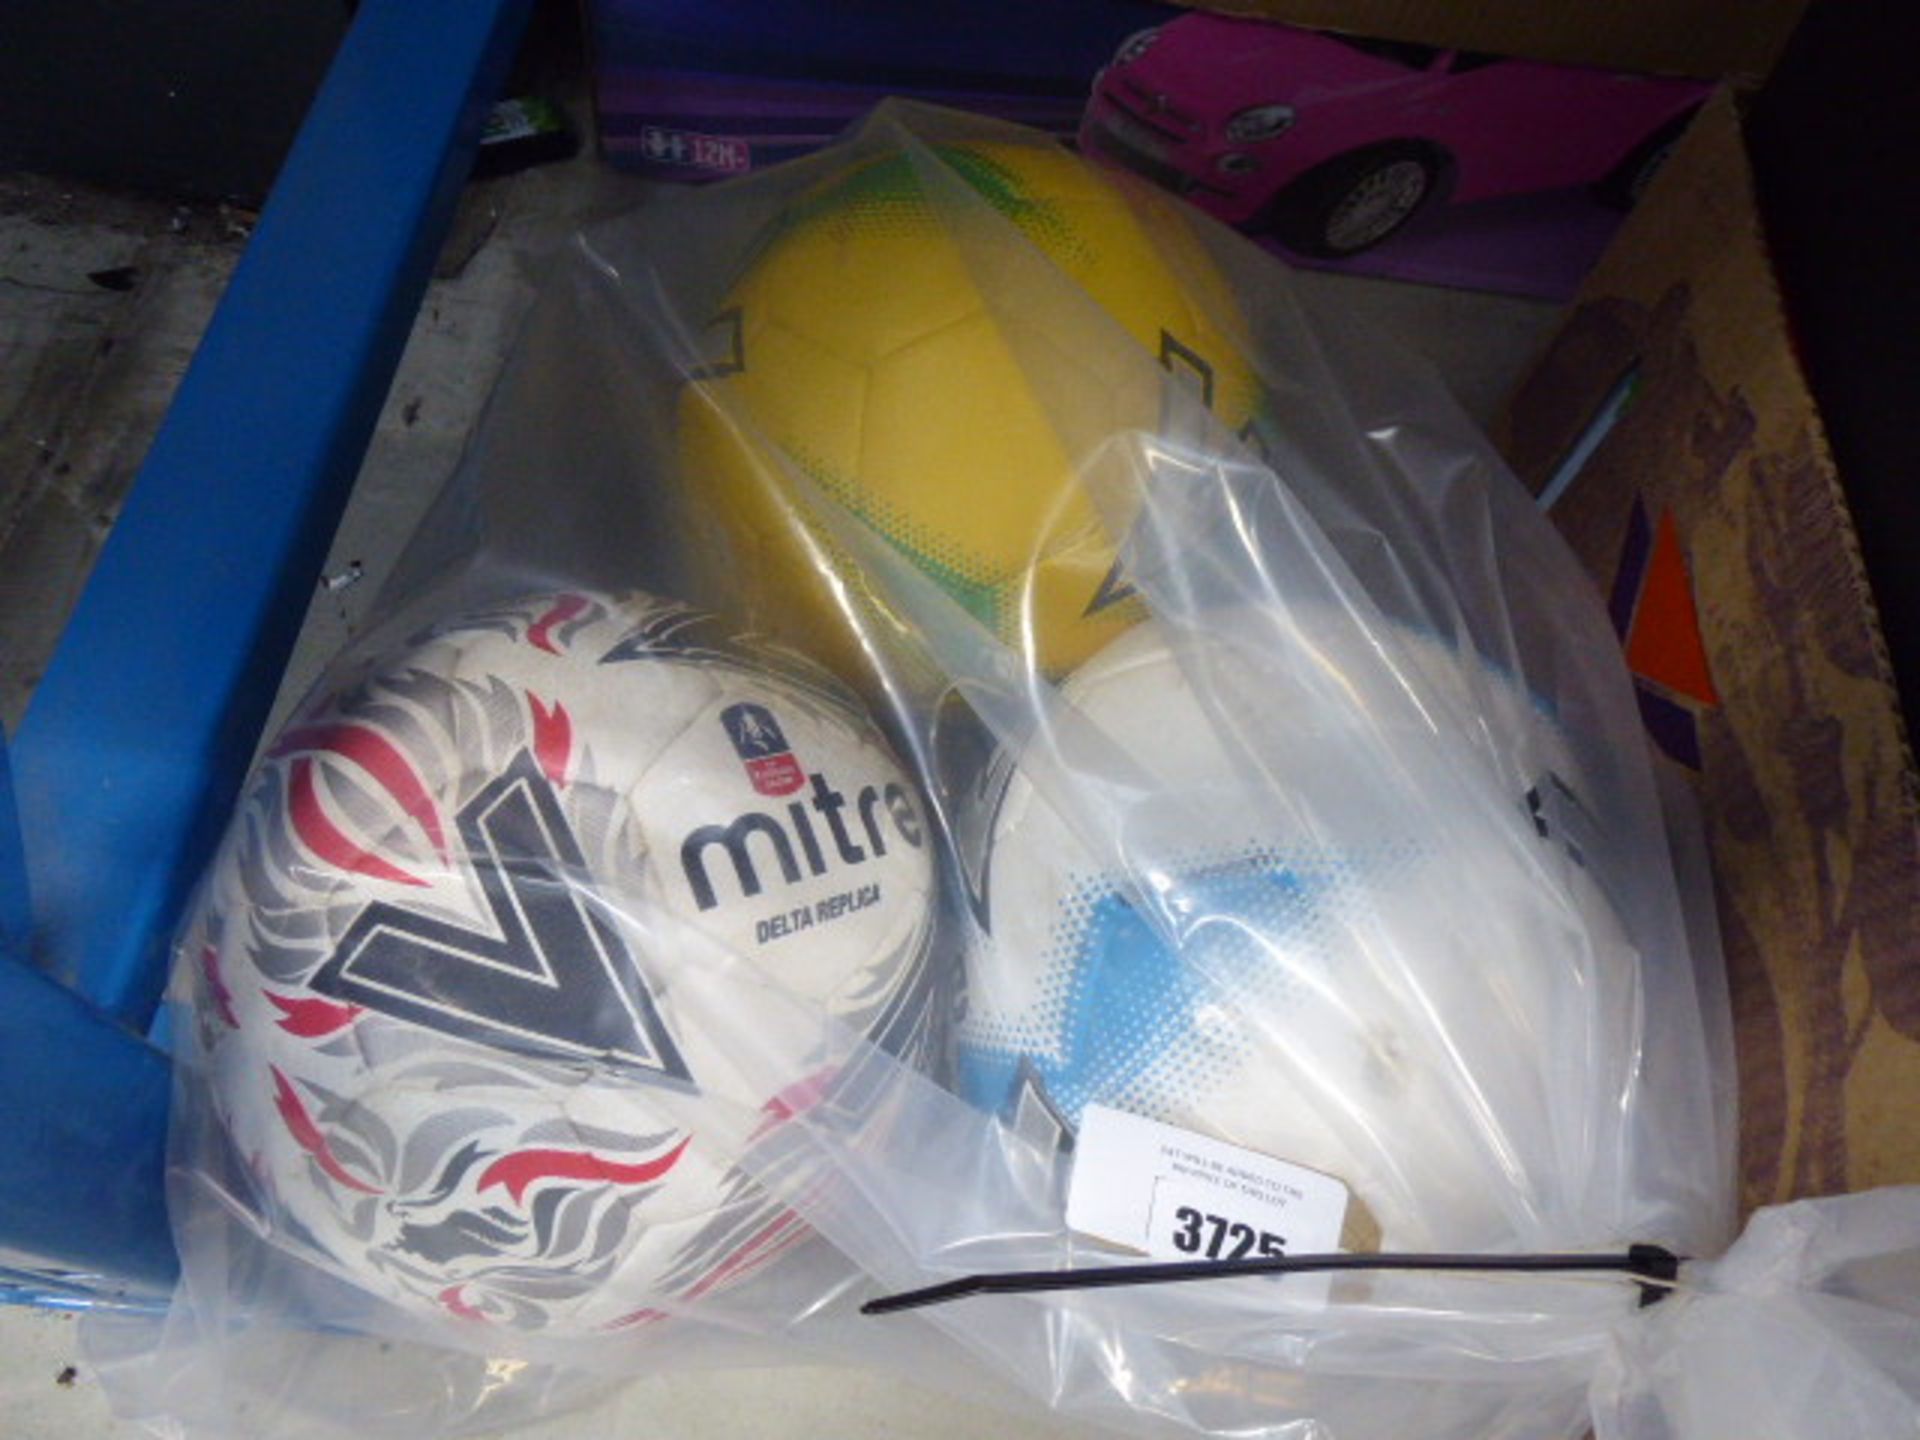 Bag containing 3 Mitre footballs